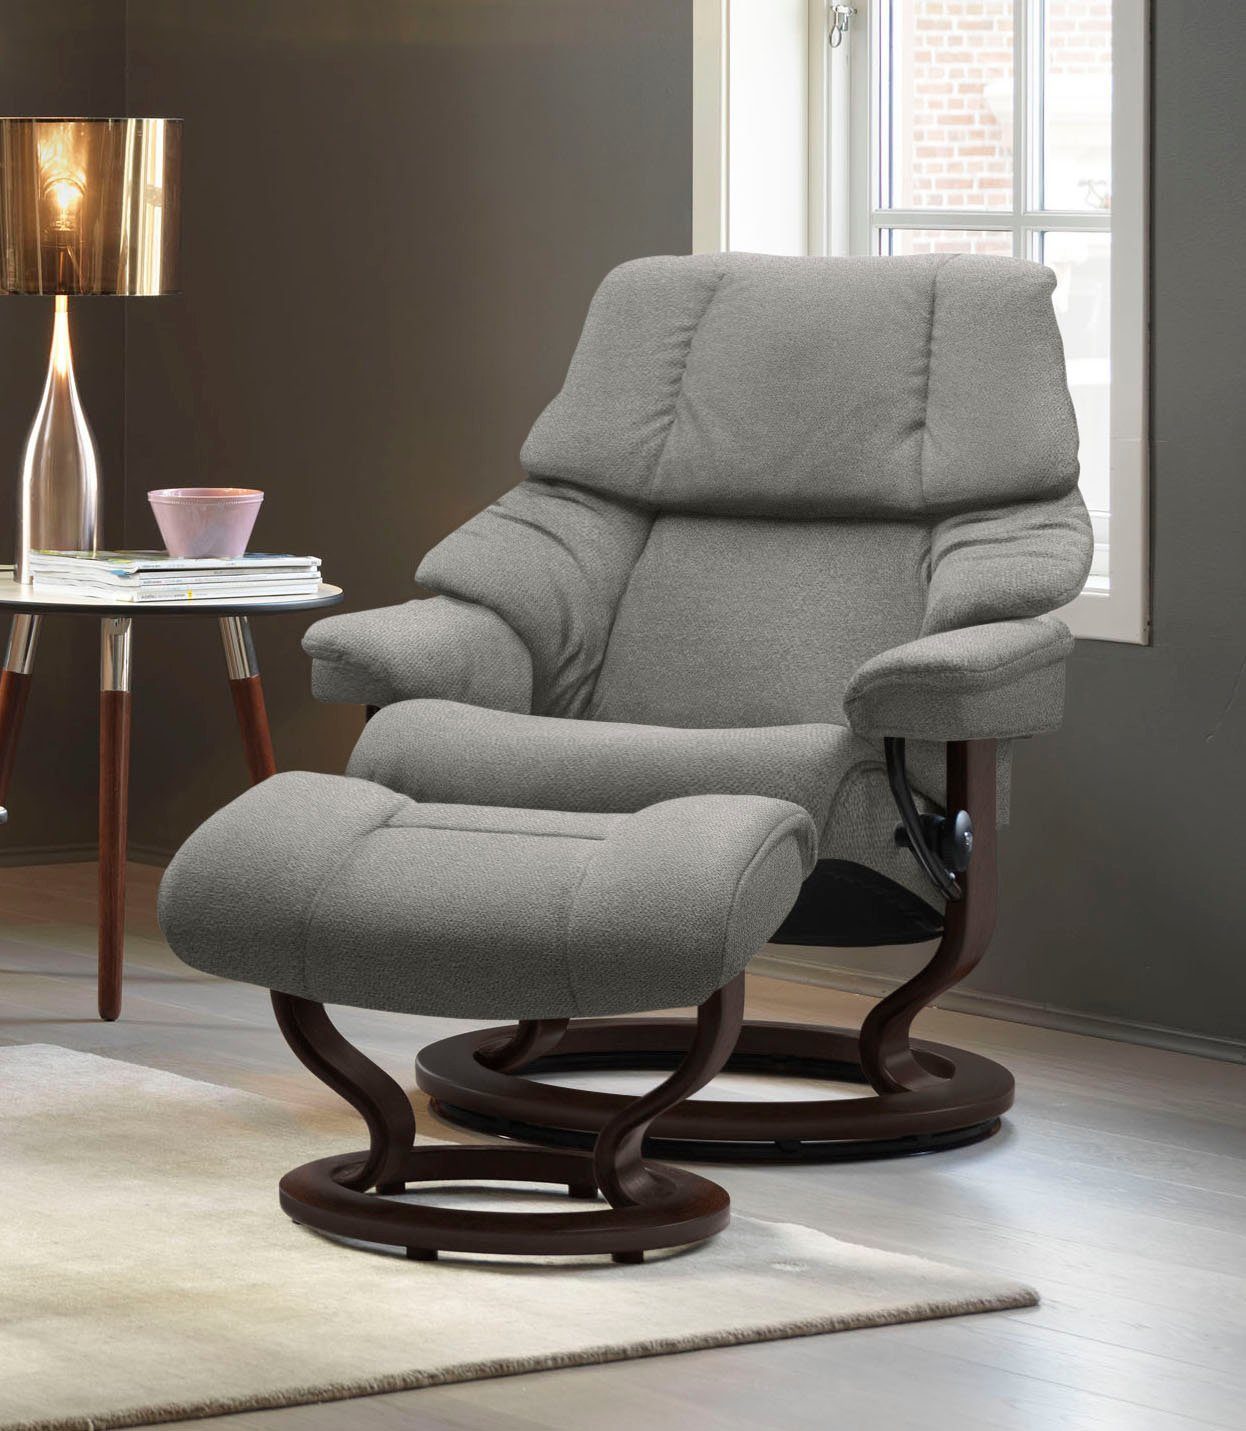 OTTO | kaufen Sunrise Sessel Stressless online